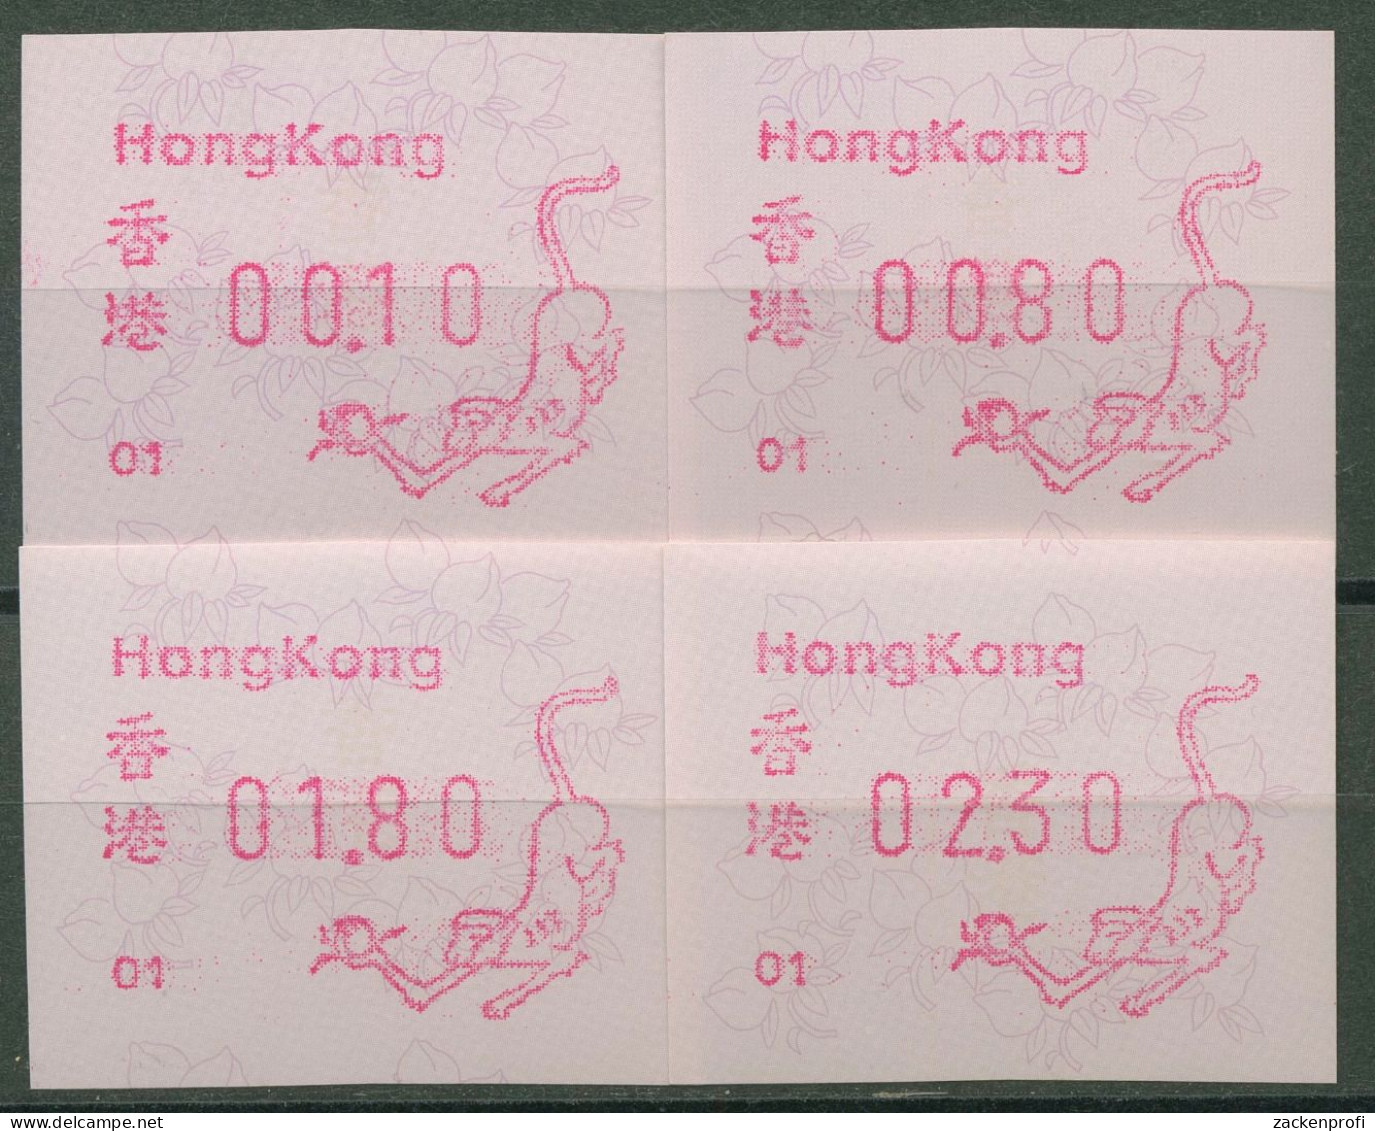 Hongkong 1992 Jahr Des Affen Automatenmarke 7.2 S1.1 Automat 01 Postfrisch - Distributors